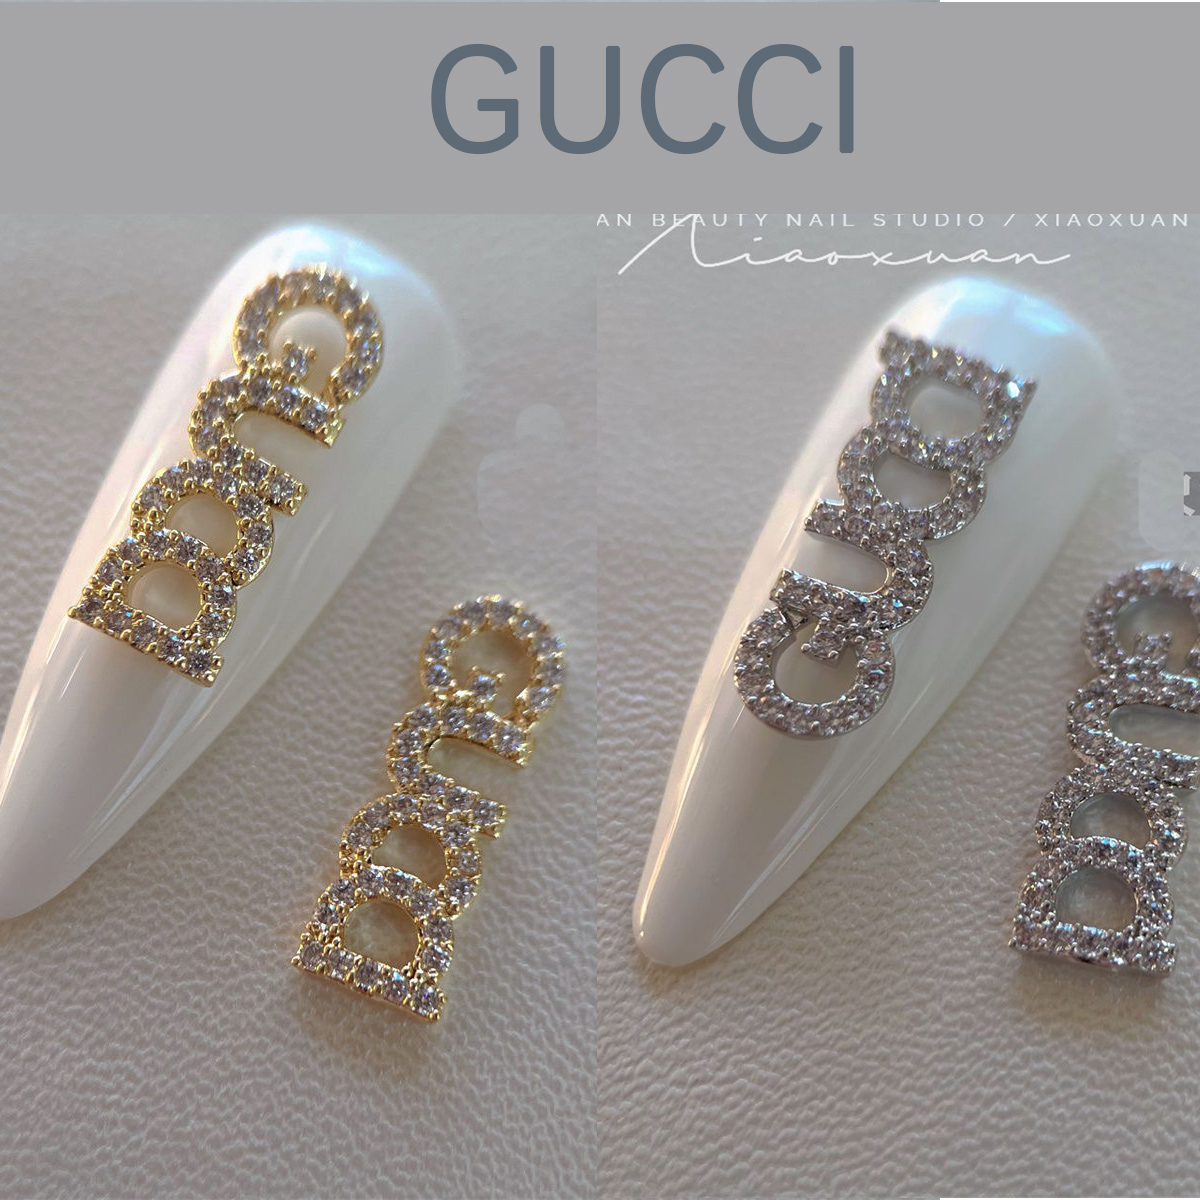 gucci nail charm gold+silver